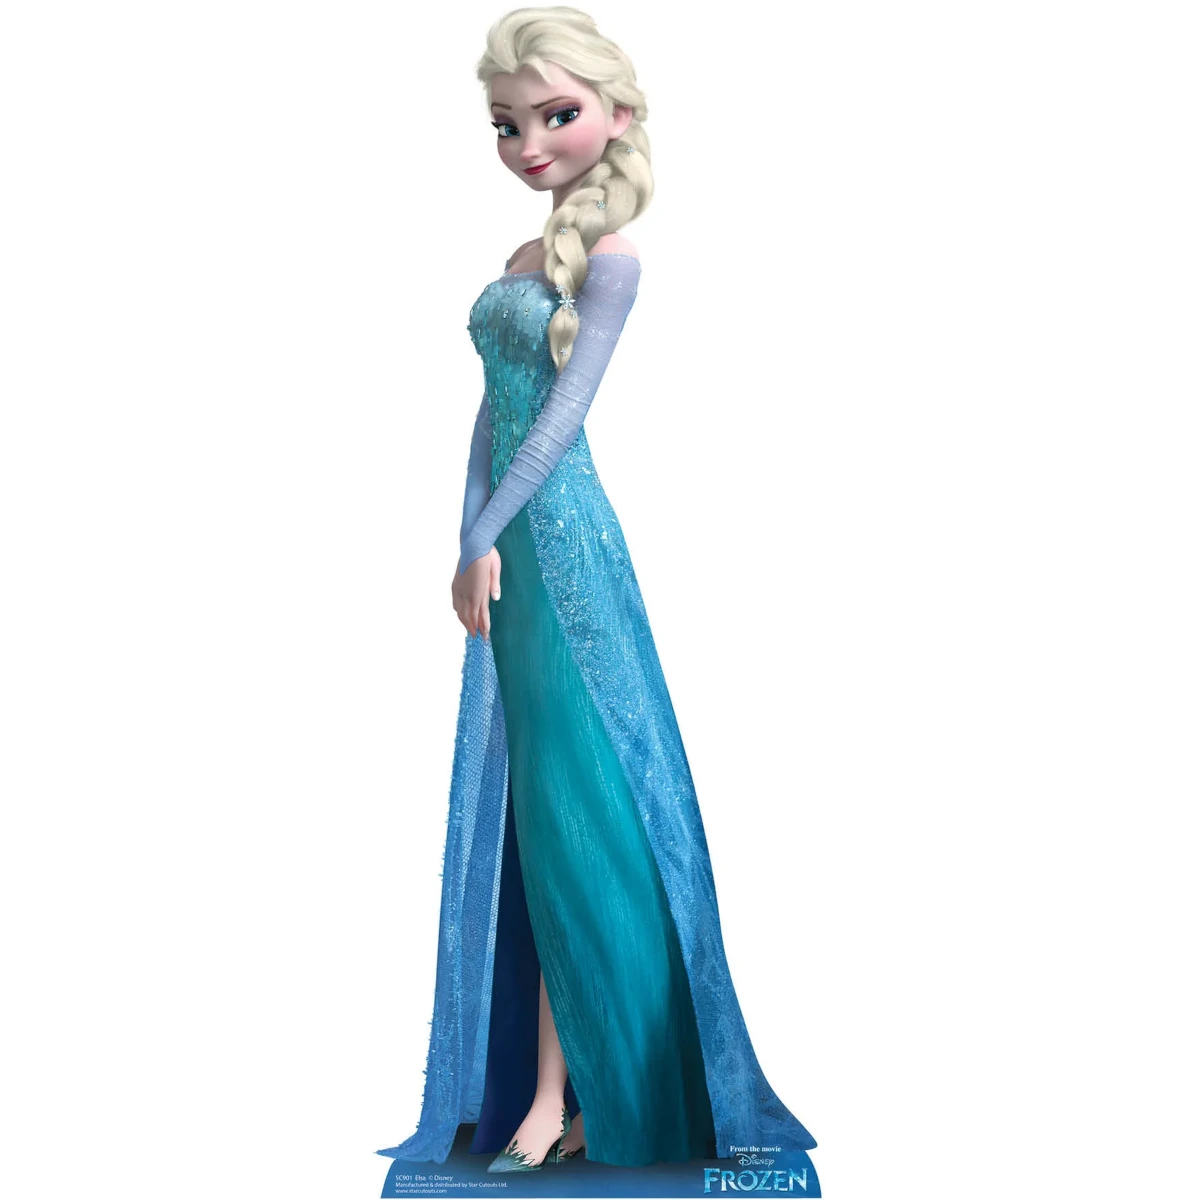 SC901 Elsa (Disney Frozen) Official Mini Cardboard Cutout Standee Front